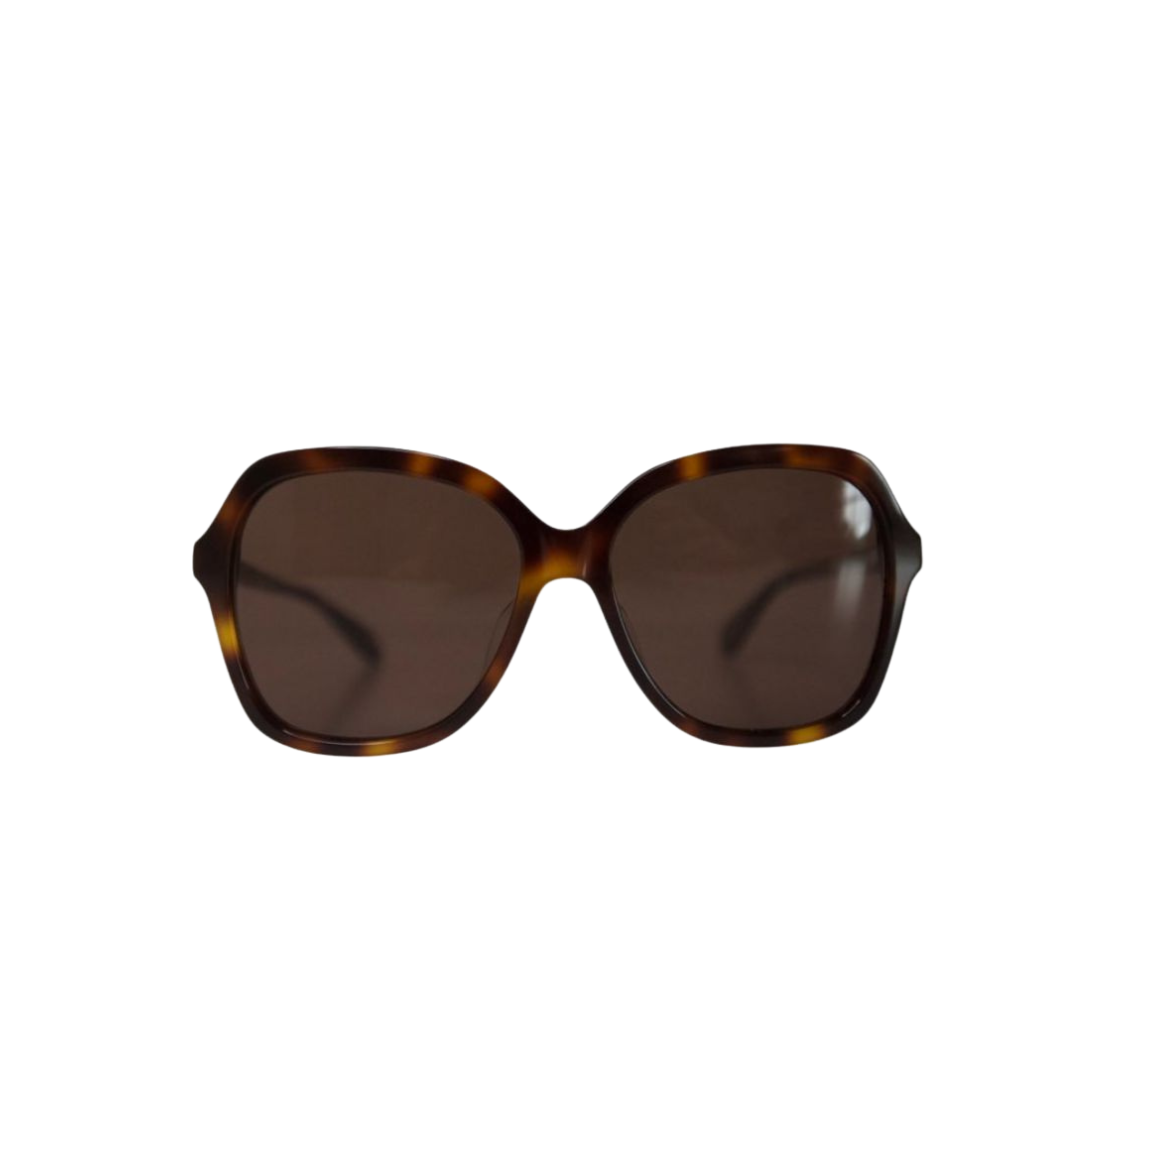 Hi'ilawe Sunglasses in Tiger Eye Tortoise in Medium nose bridge with Tan Polarized Lenses